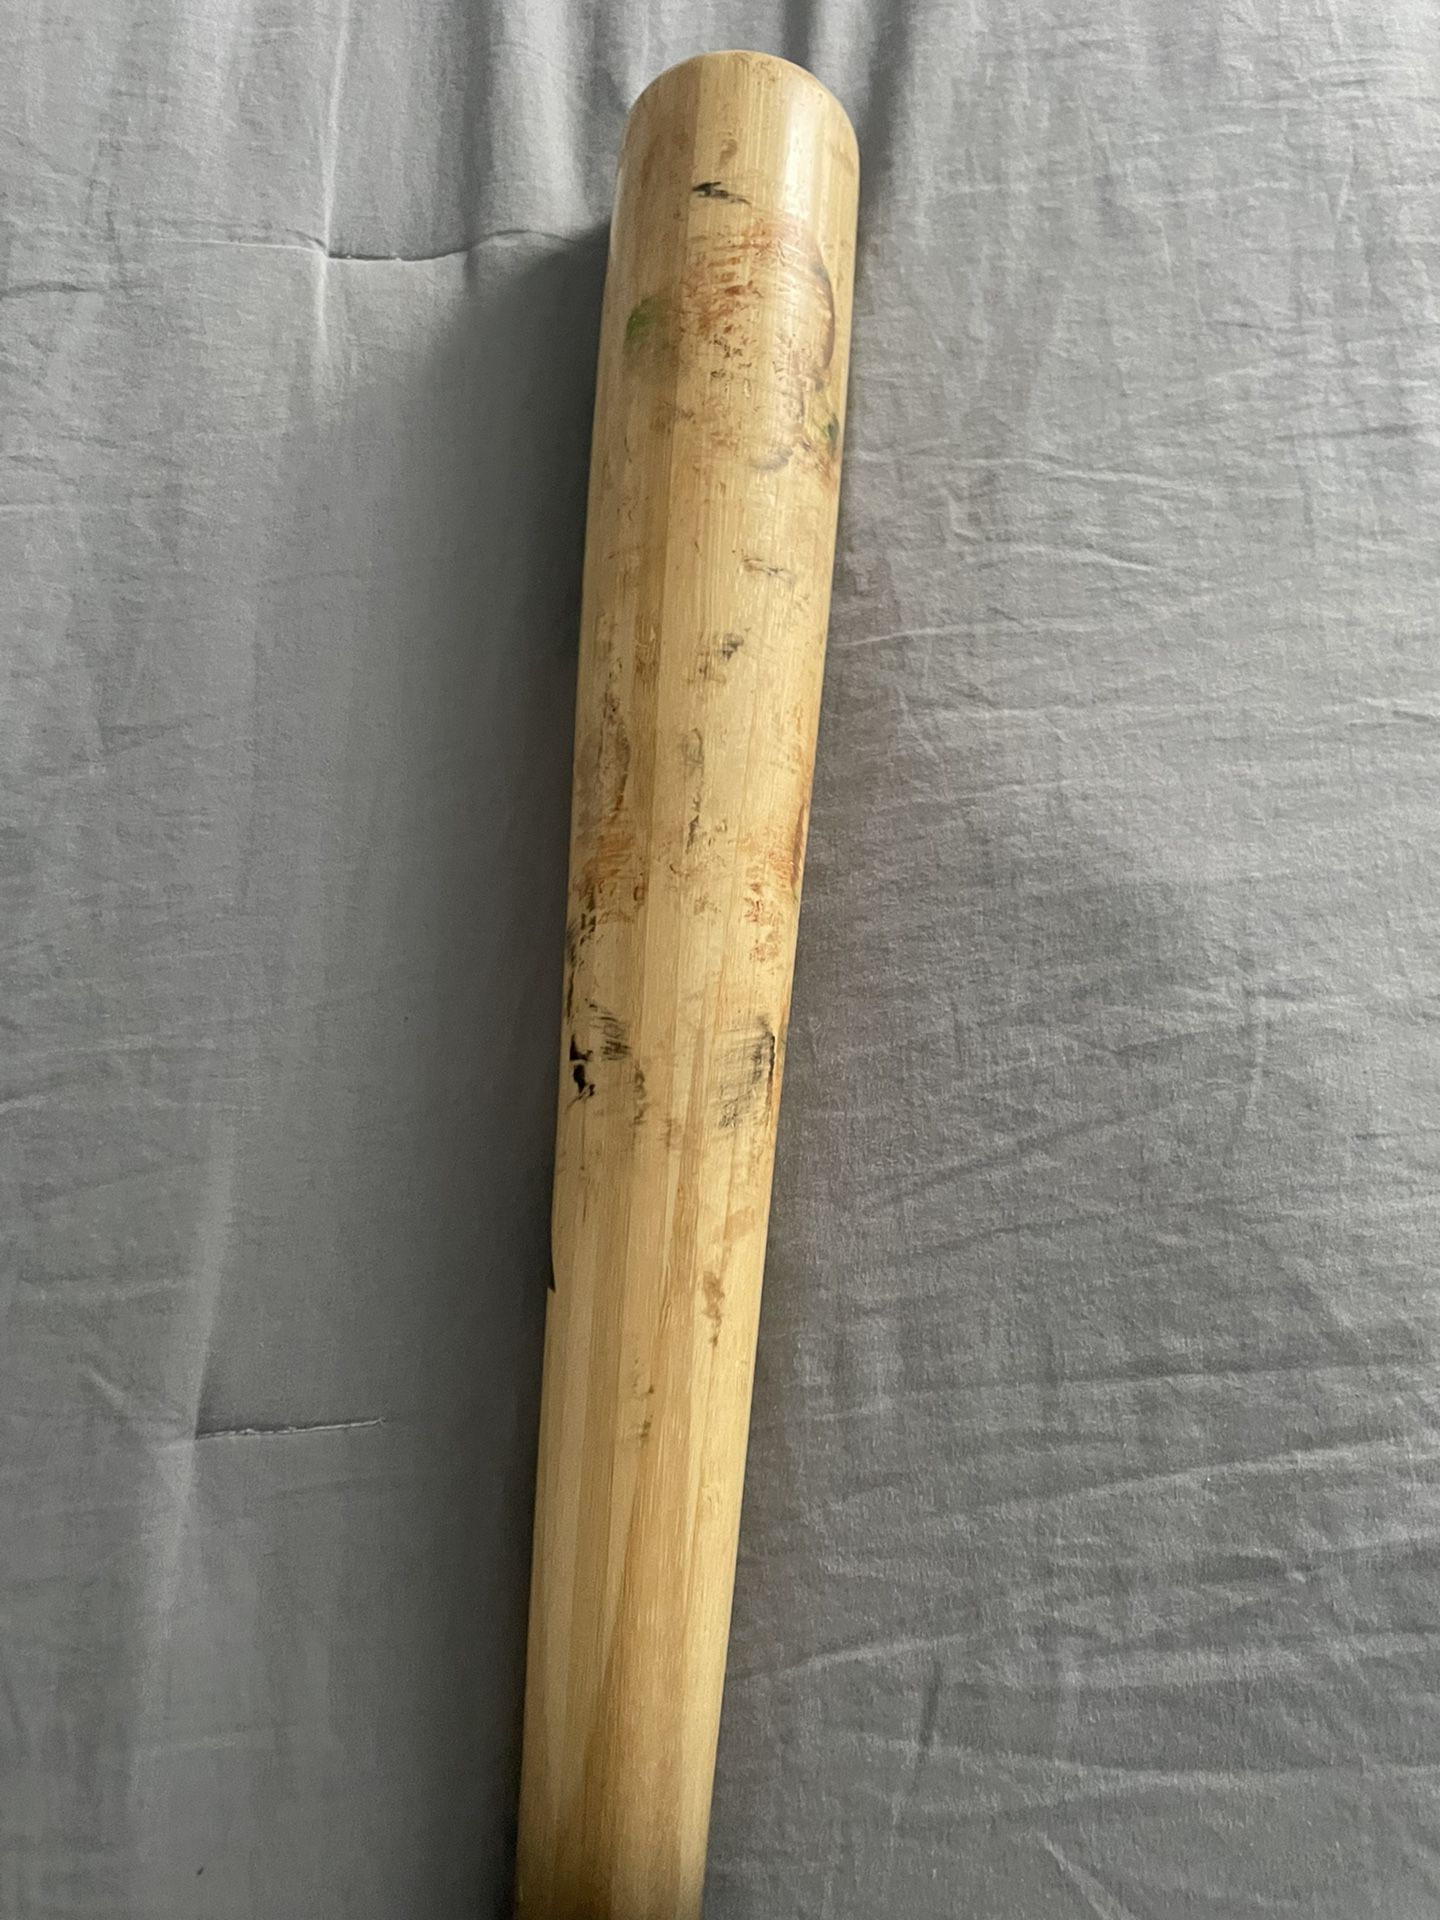 BBB baseball bat BBCOR certified. 32in 